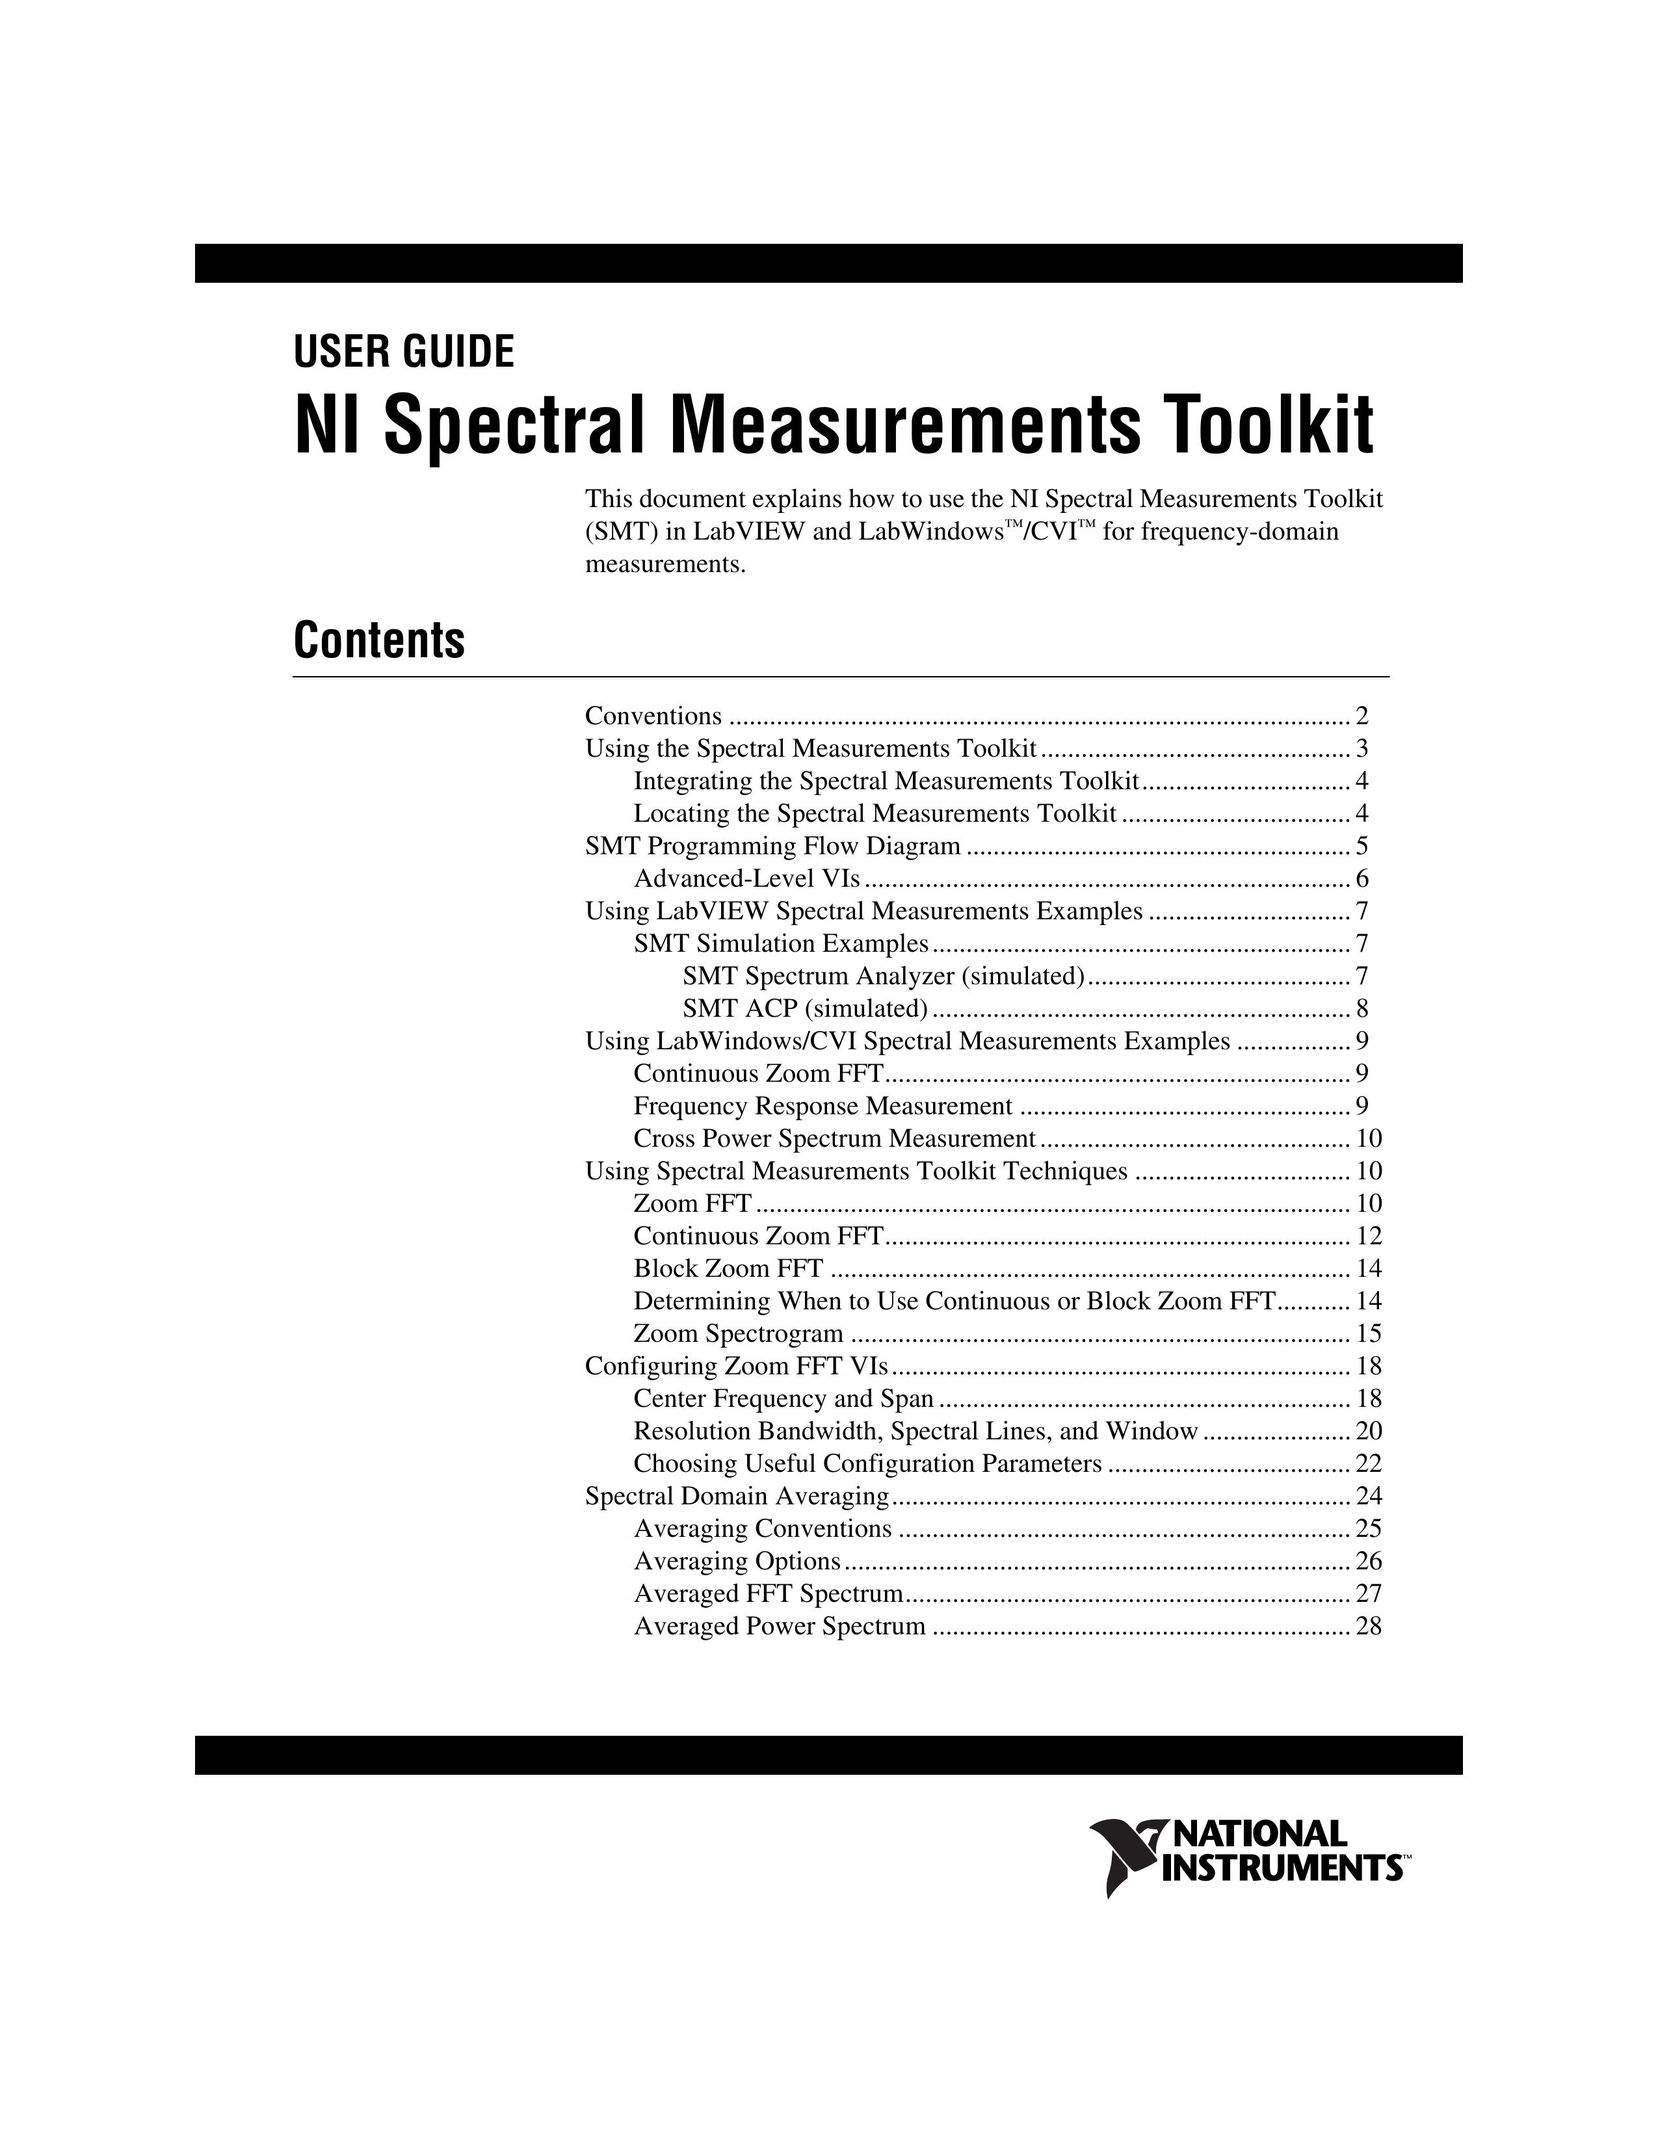 National Instruments Toolkit Tool Storage User Manual